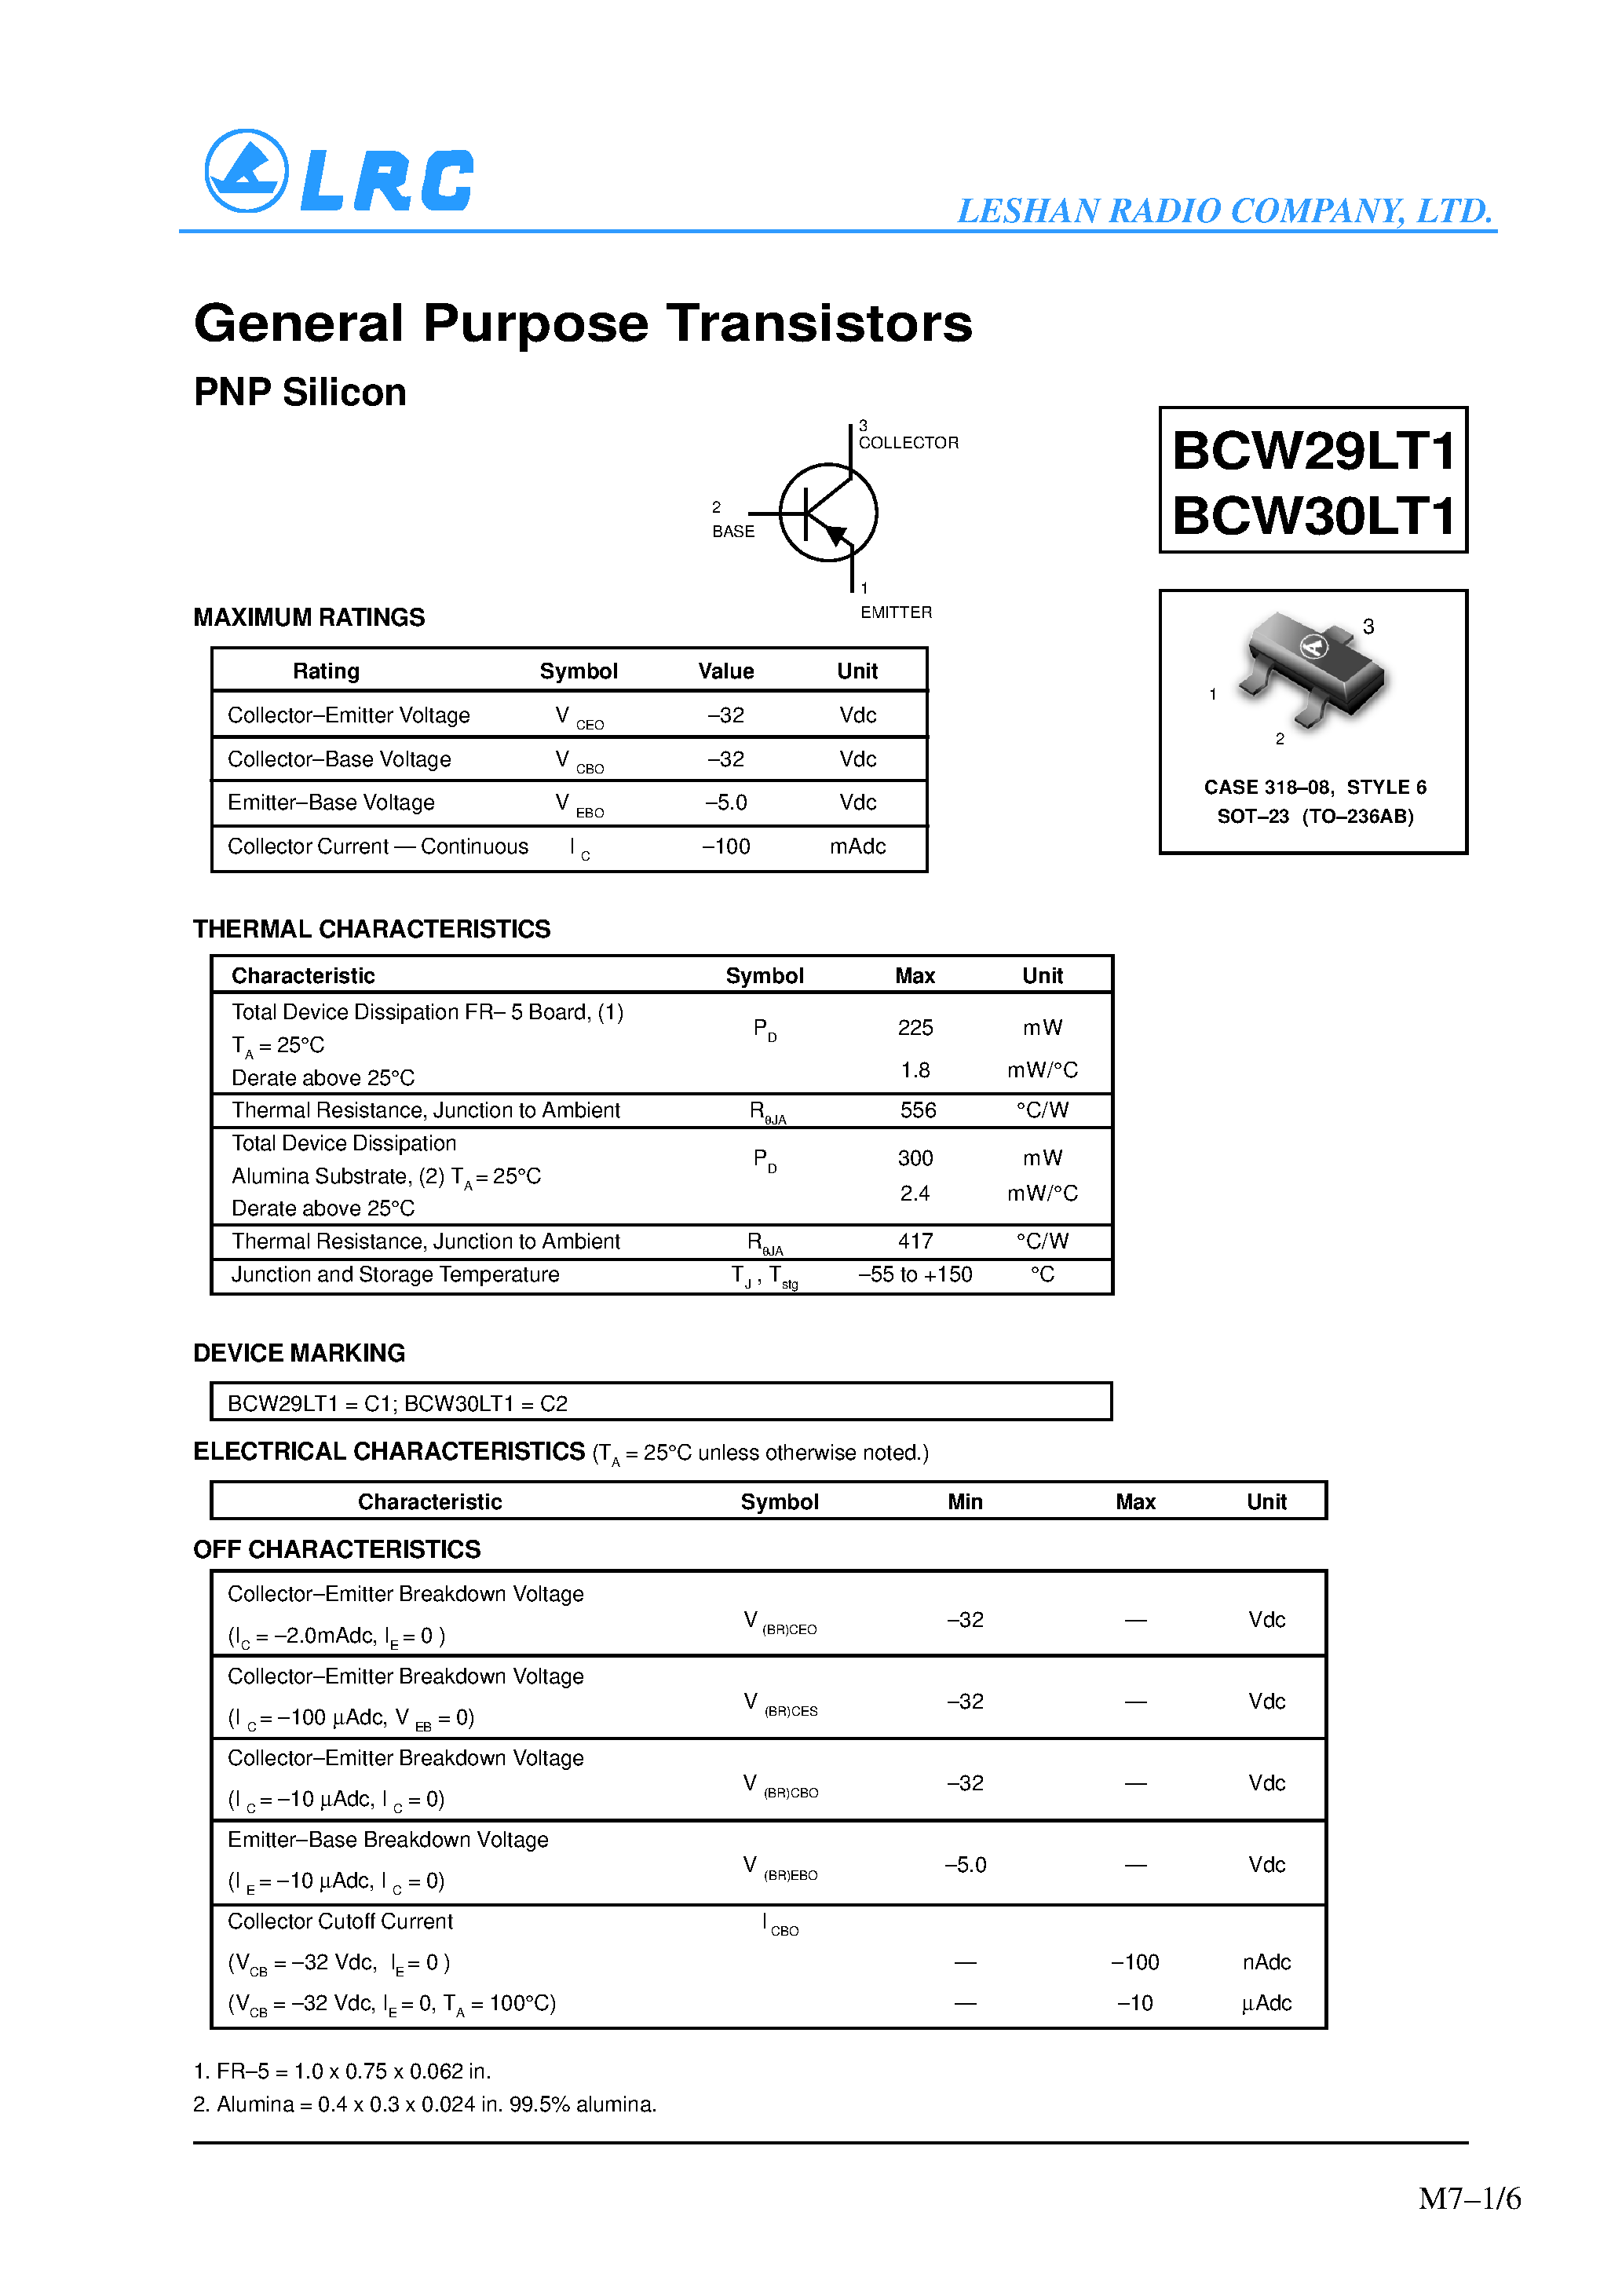 Datasheet BCW30LT1 - General Purpose Transistors(PNP Silicon) page 1